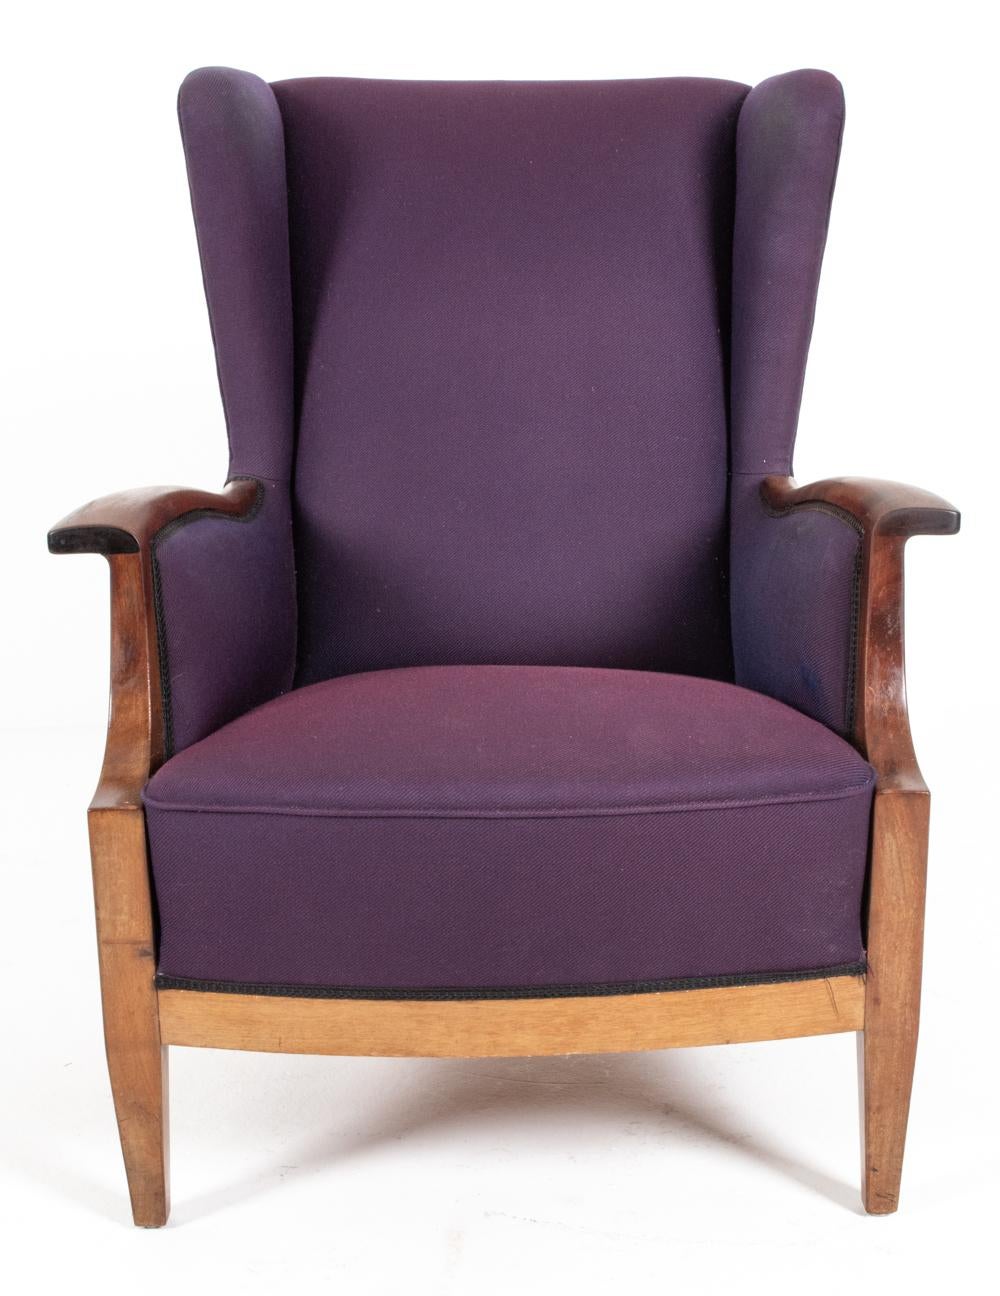 Scandinavian Modern Frits Henningsen Danish Wingback Lounge Chair, c. 1940's  For Sale